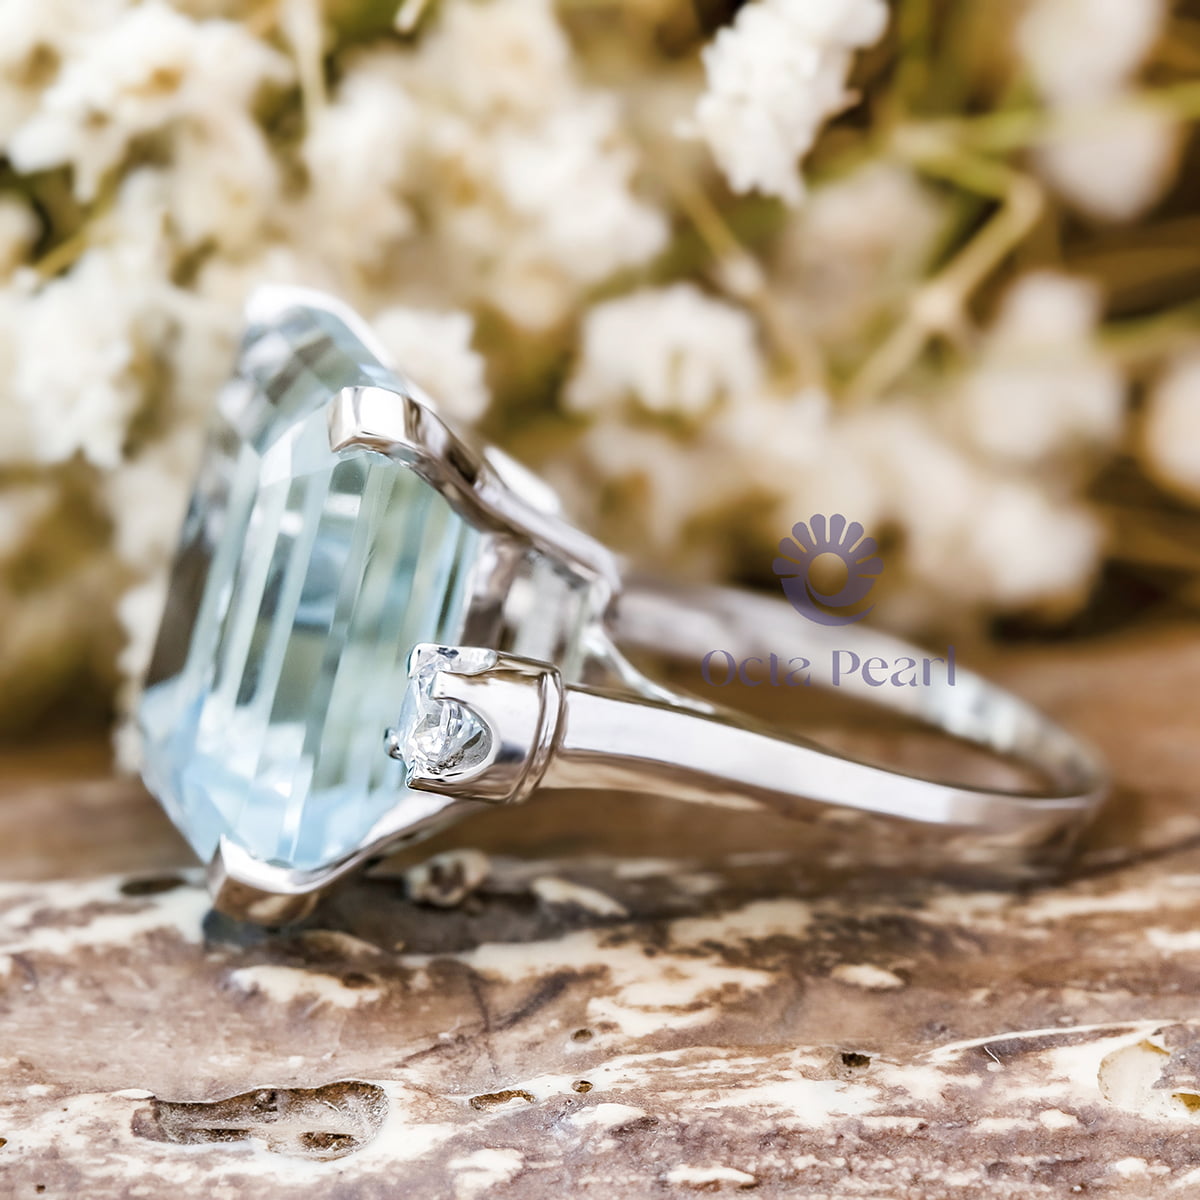 Aqua Emerald And Round Cut CZ Three Stone Wedding Ring For Women (14 2/5 TCW)